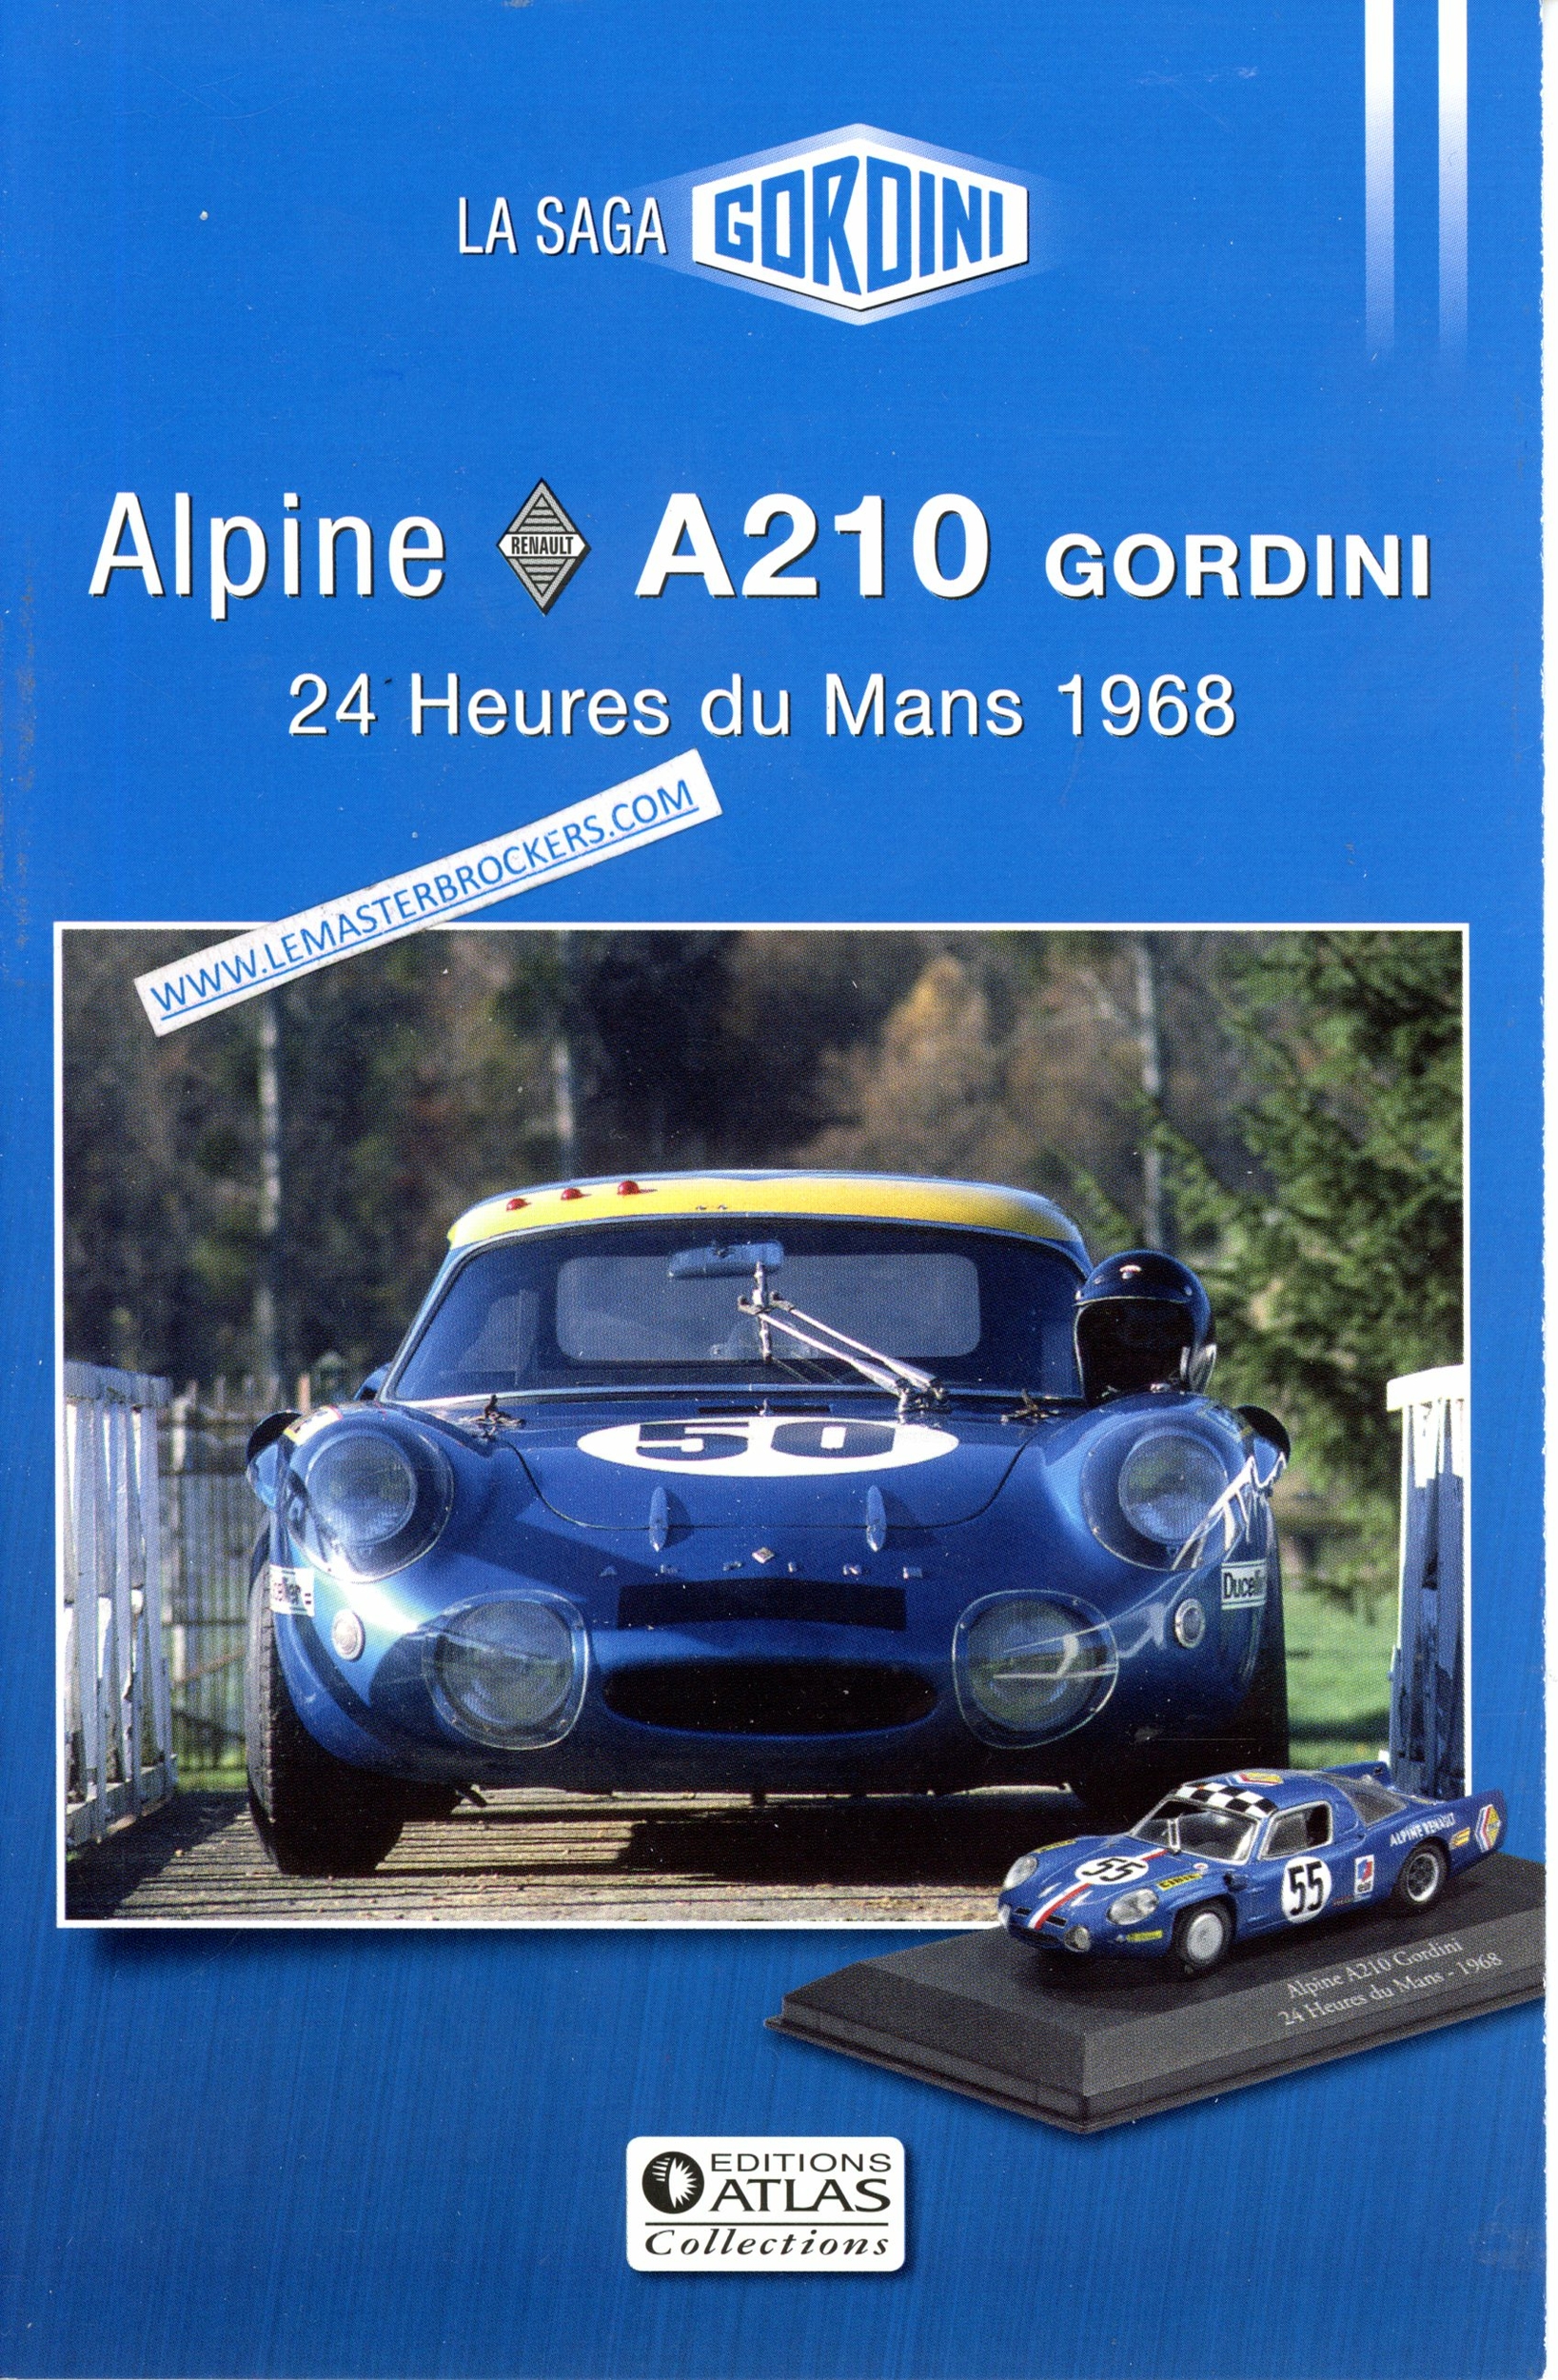 BROCHURE SAGA GORDINI ALPINE A210 24H DU MANS 1968